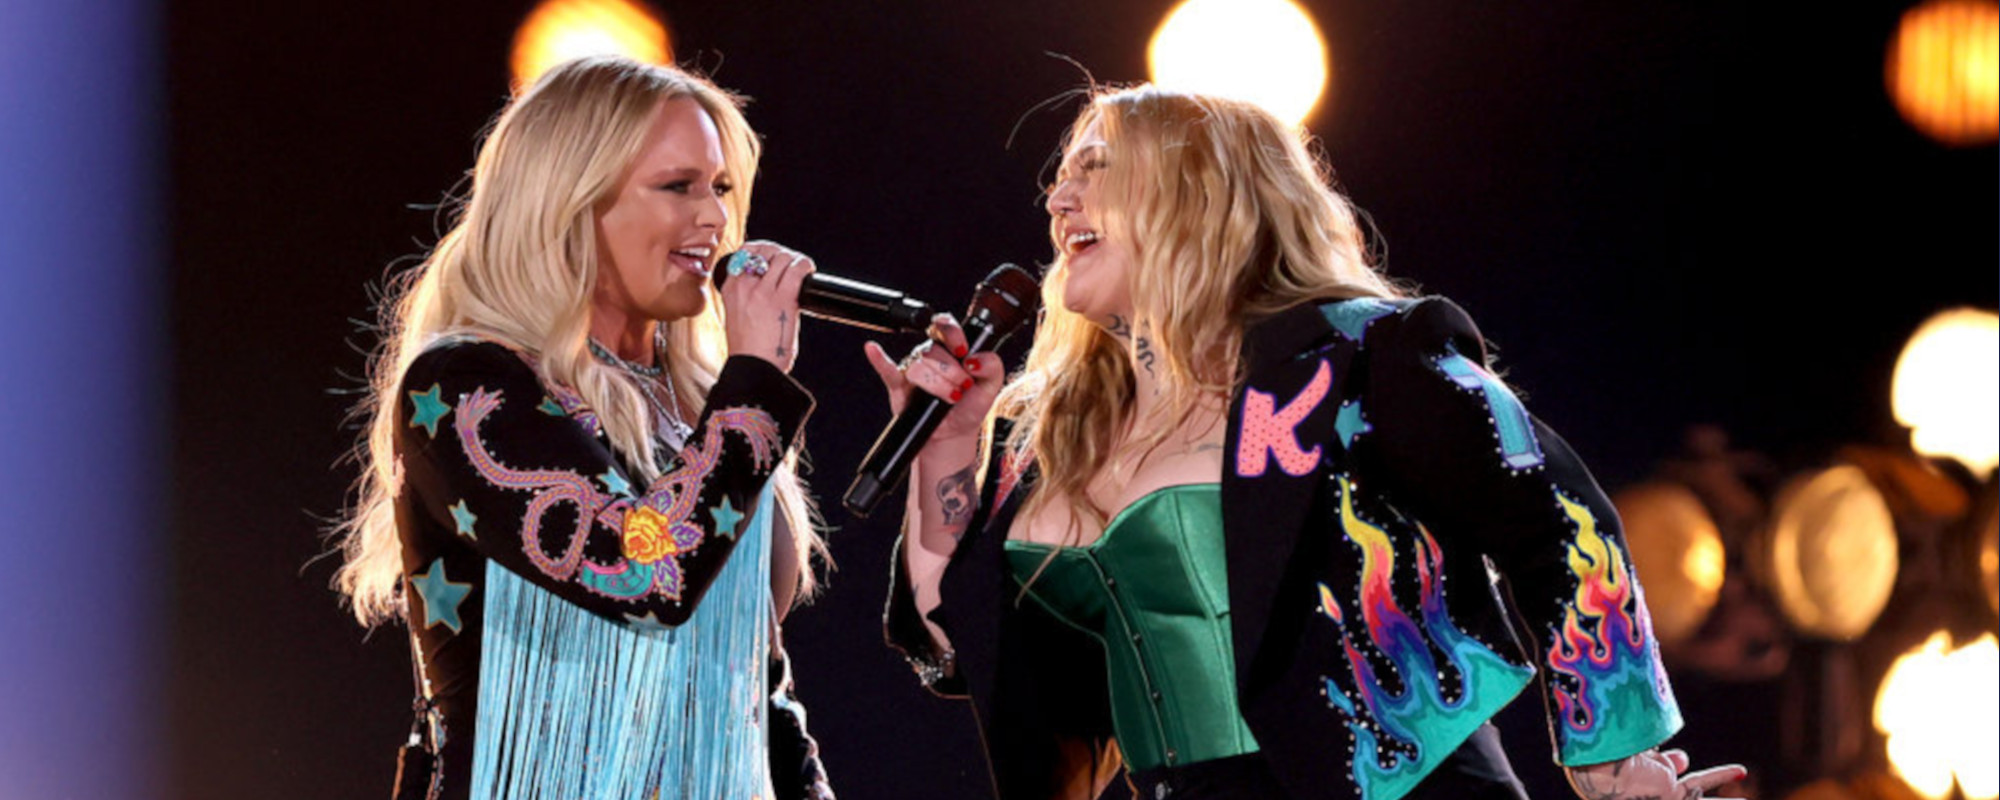 Miranda Lambert and Elle King Bring “Drunk” to the 2022 Billboard Music Awards